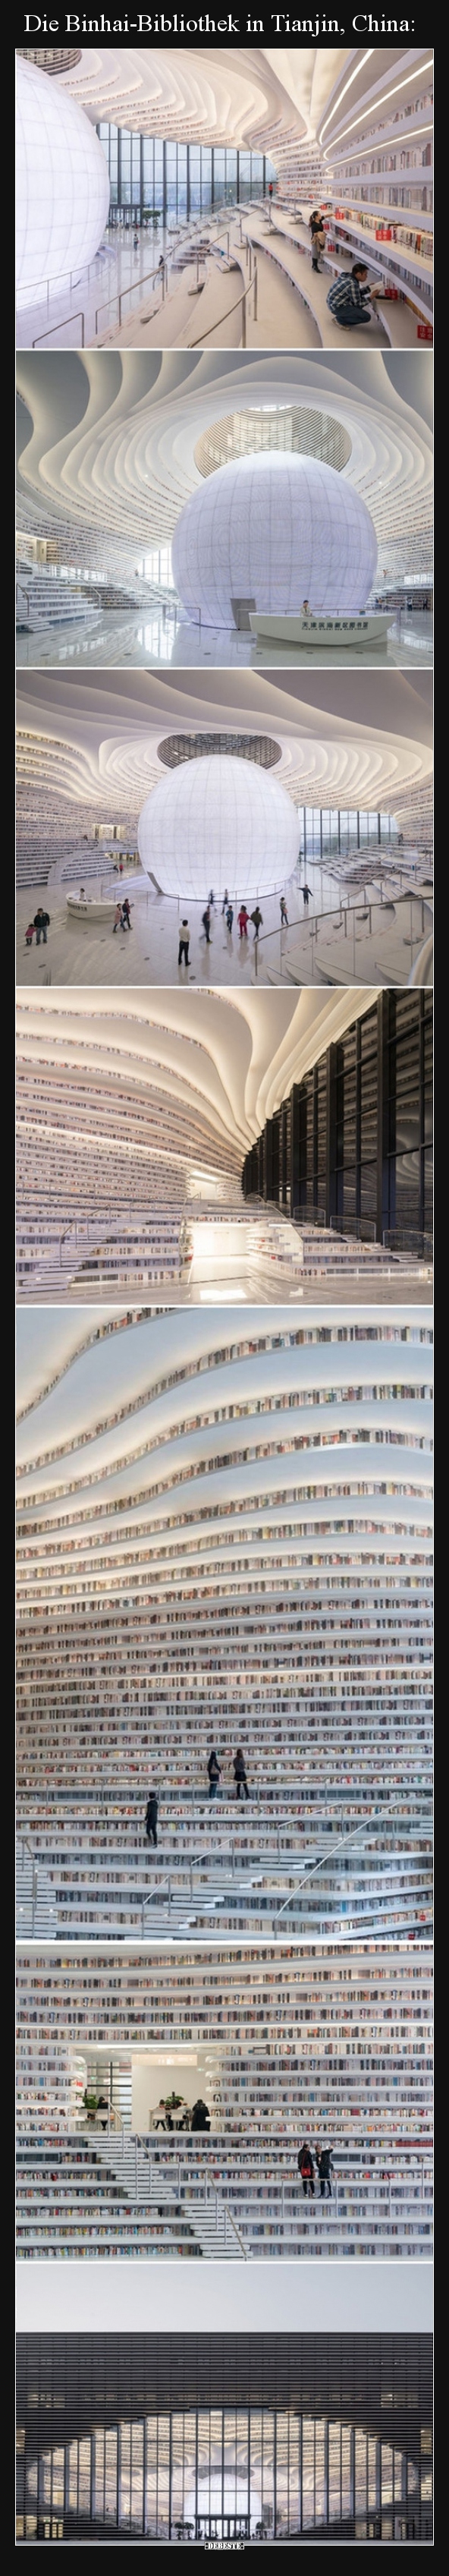 Die Binhai-Bibliothek in Tianjin, China.. - Lustige Bilder | DEBESTE.de